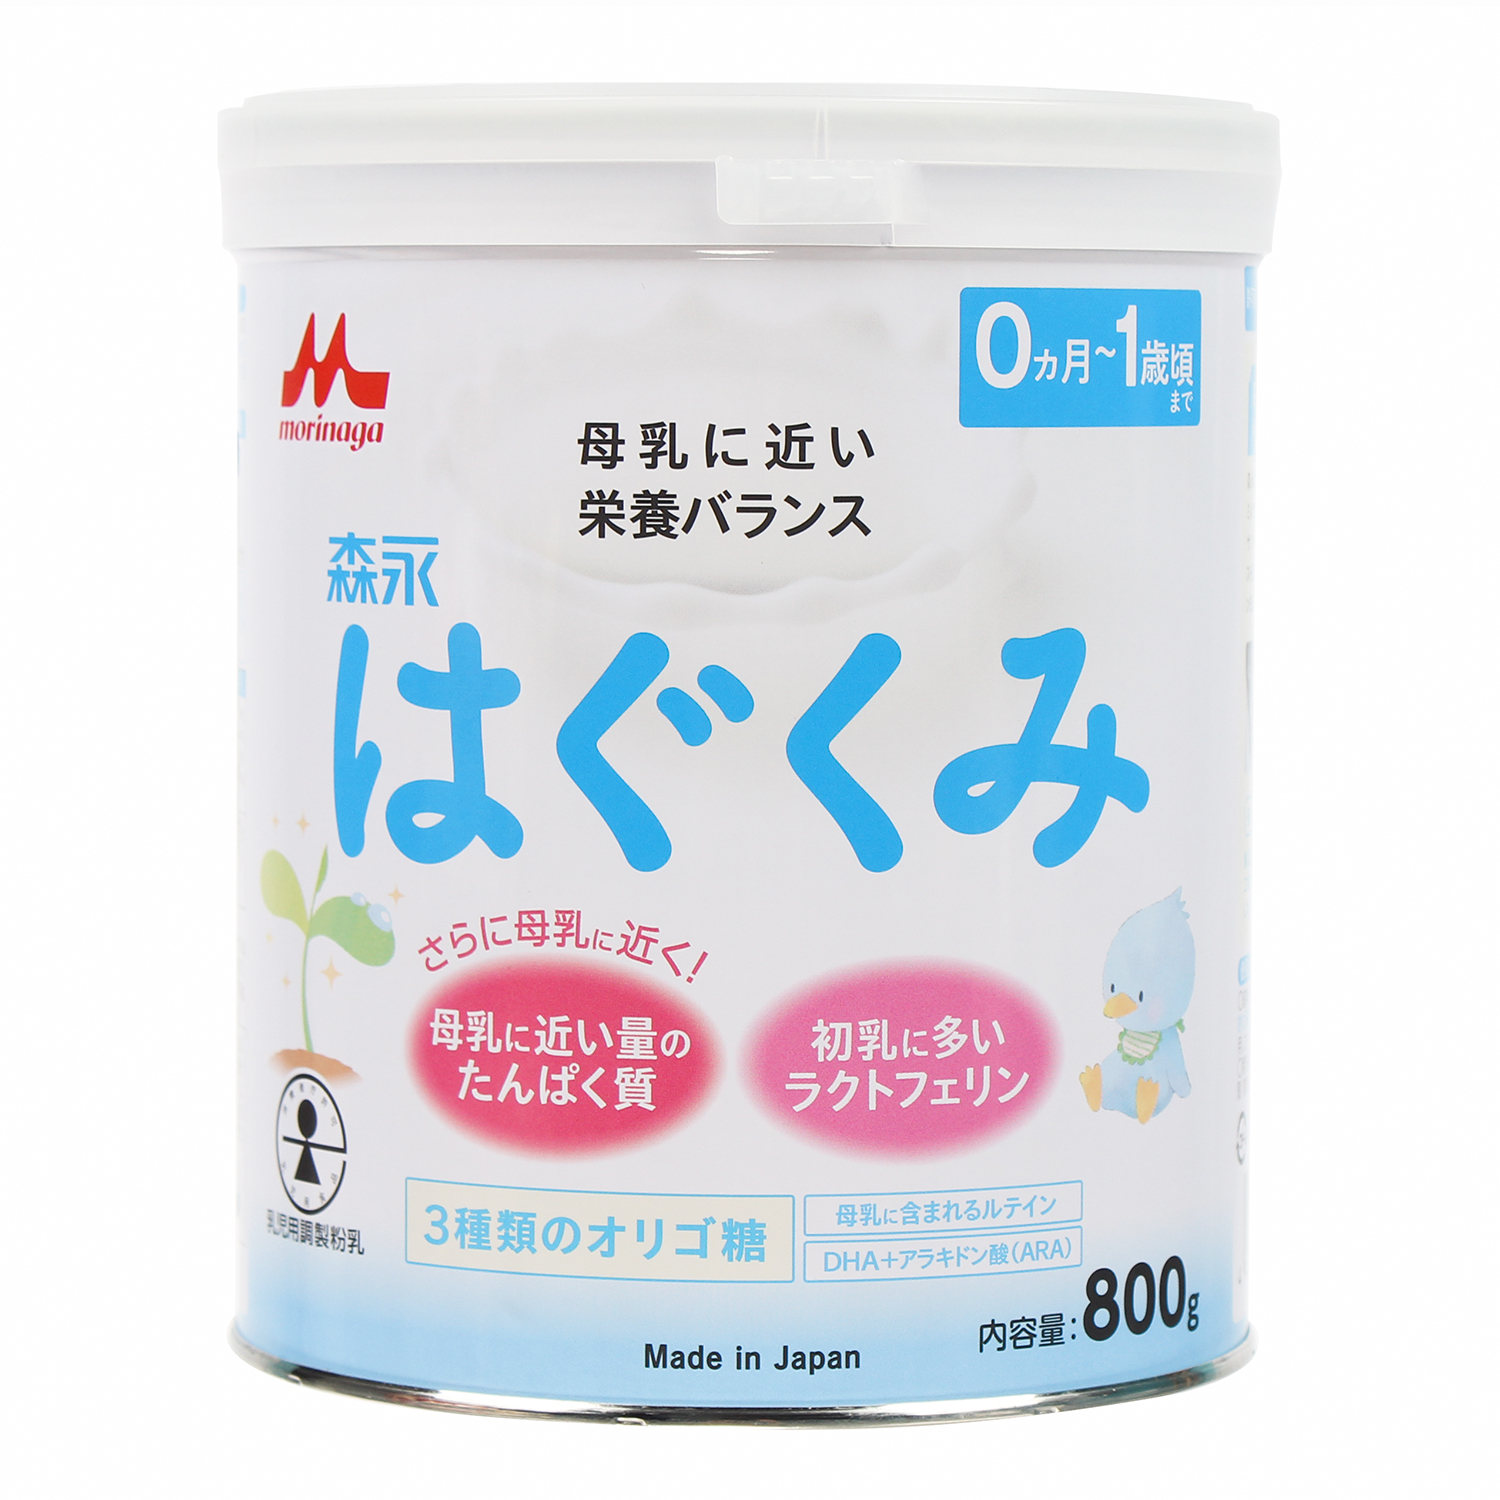 Sữa Morinaga số 0 mẫu mới